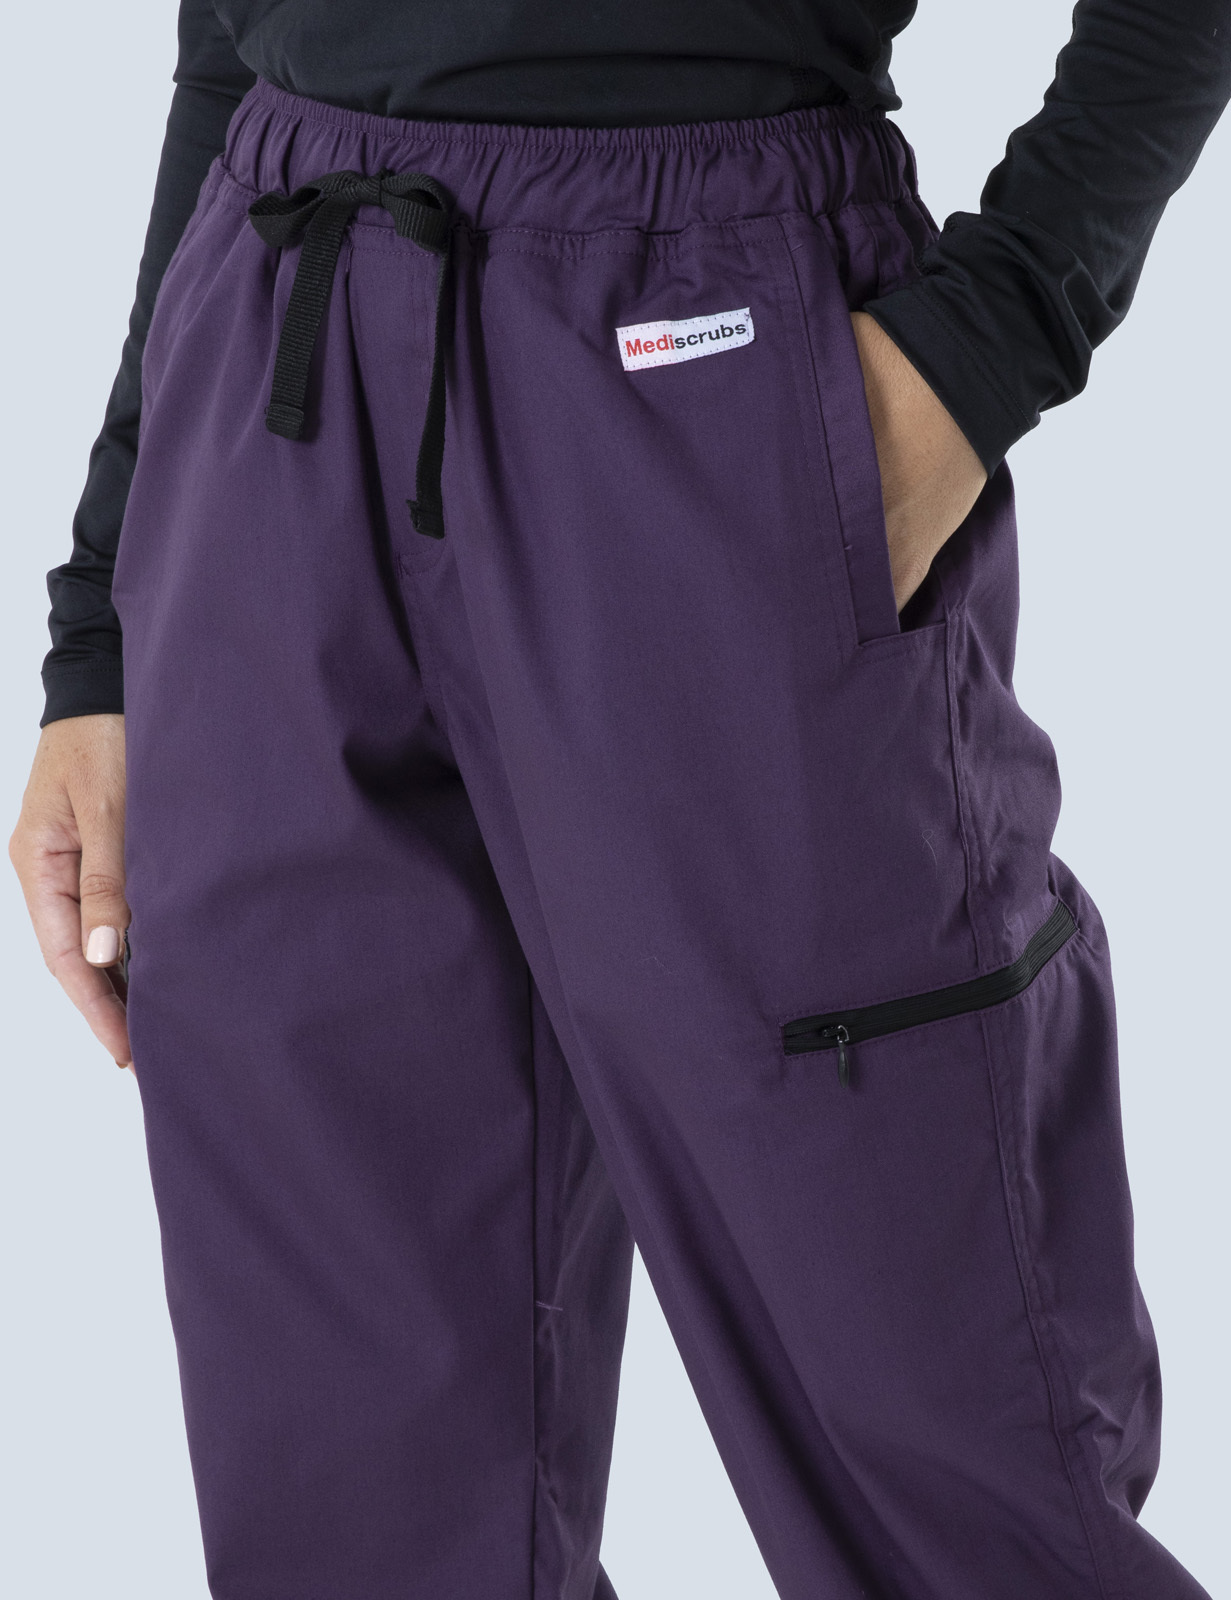 Women's Utility Pants - Aubergine - 2X Large